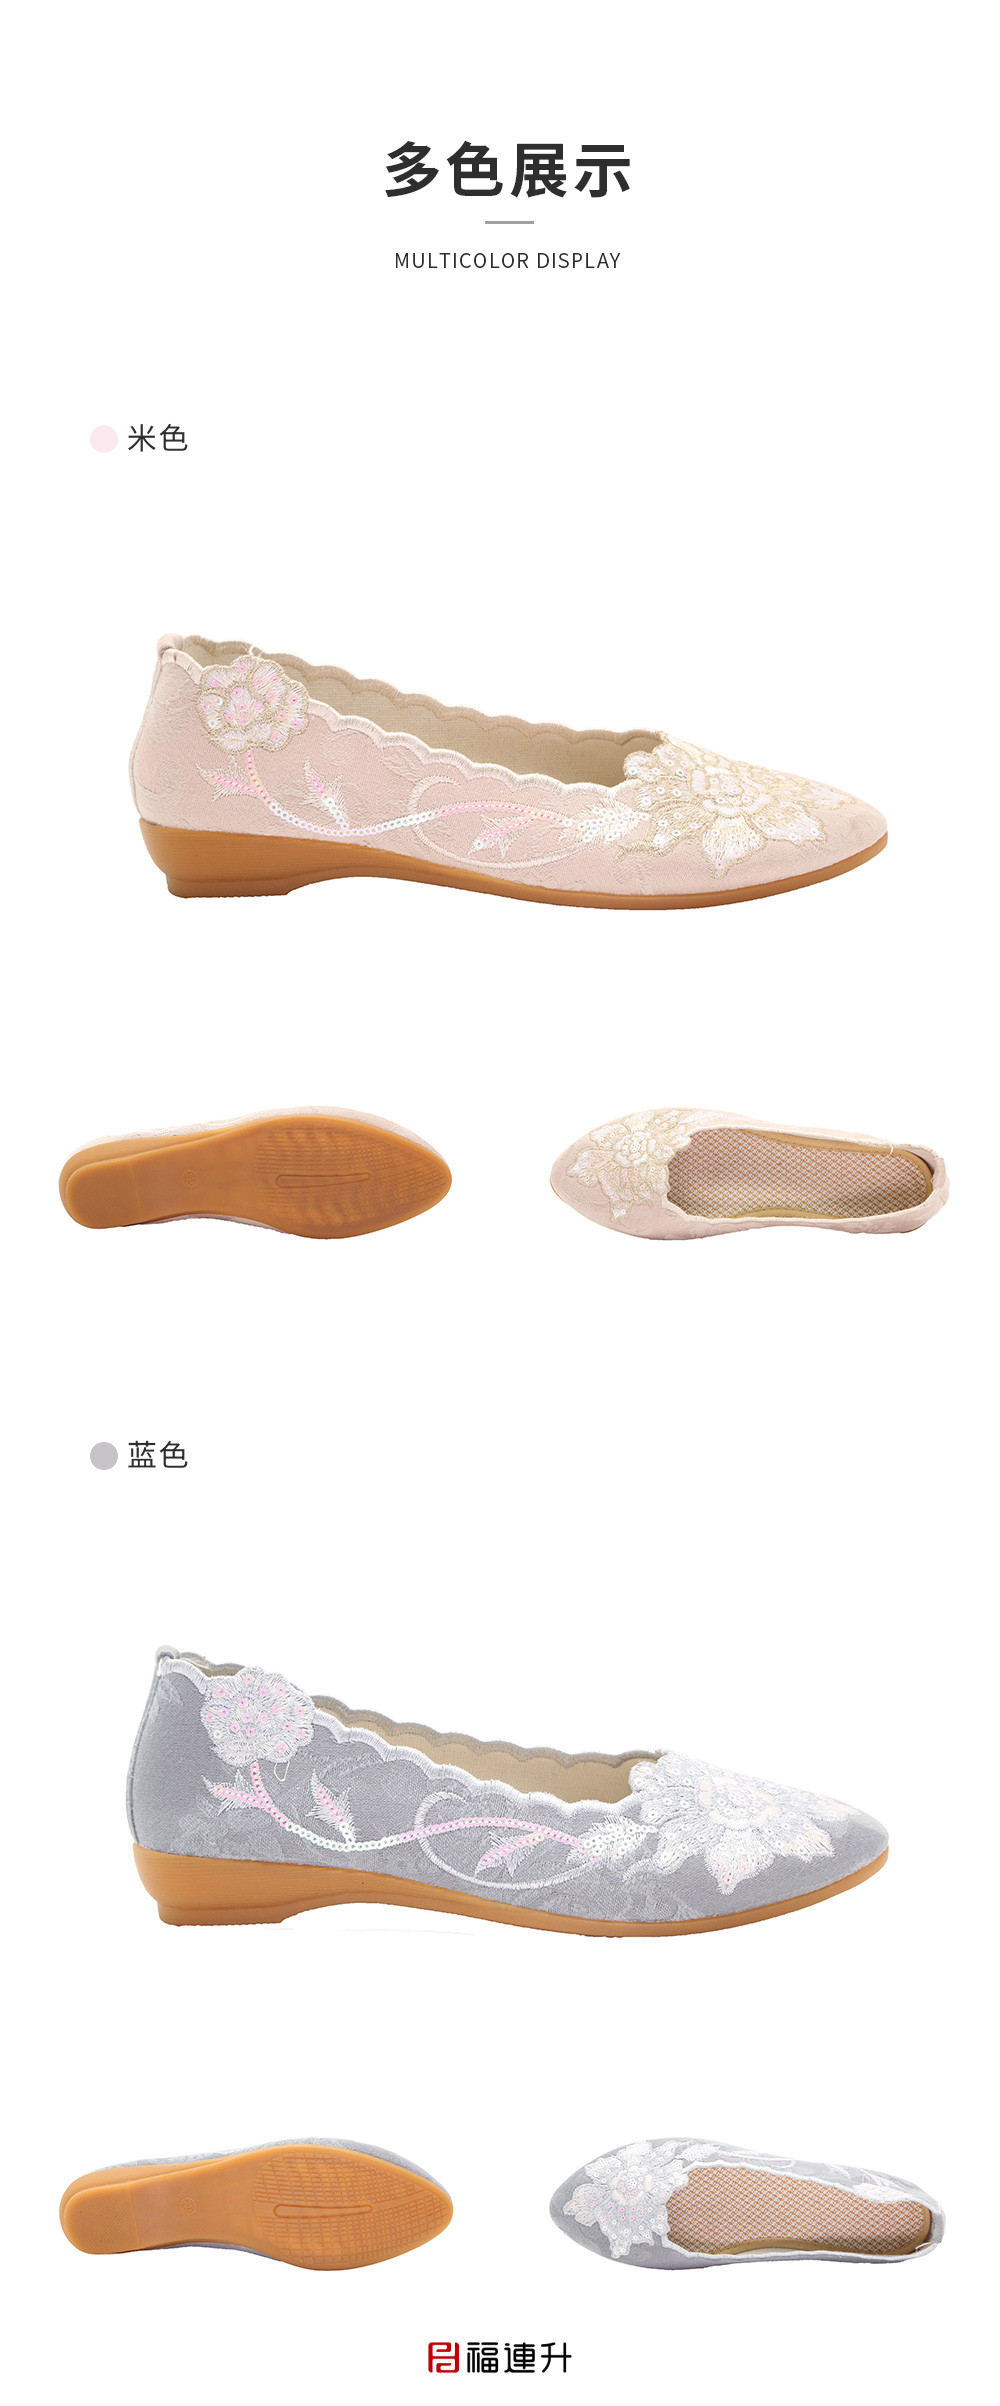 www.649.net春夏低跟民族风绣花鞋女士单鞋(图7)